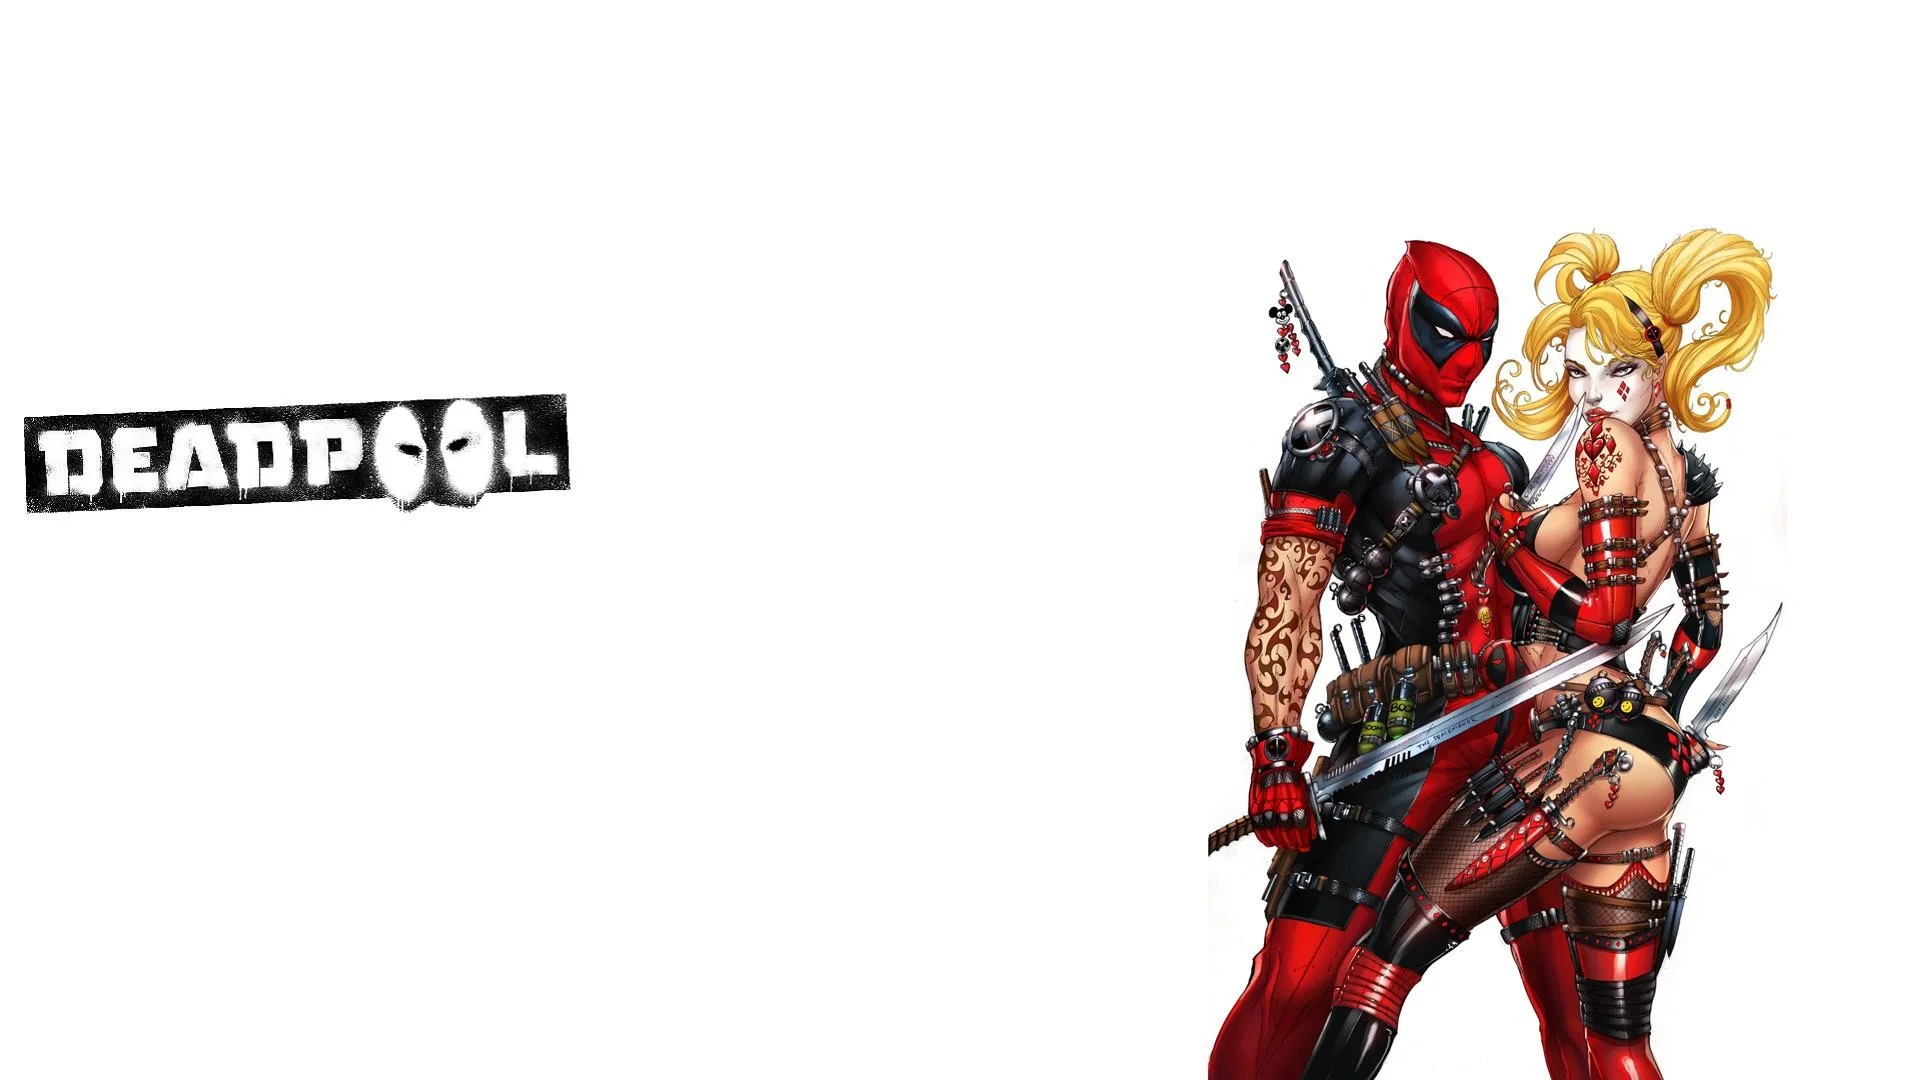 Deadpool n Harley Quinn wallpaper enjoy (1080p) – Imgur